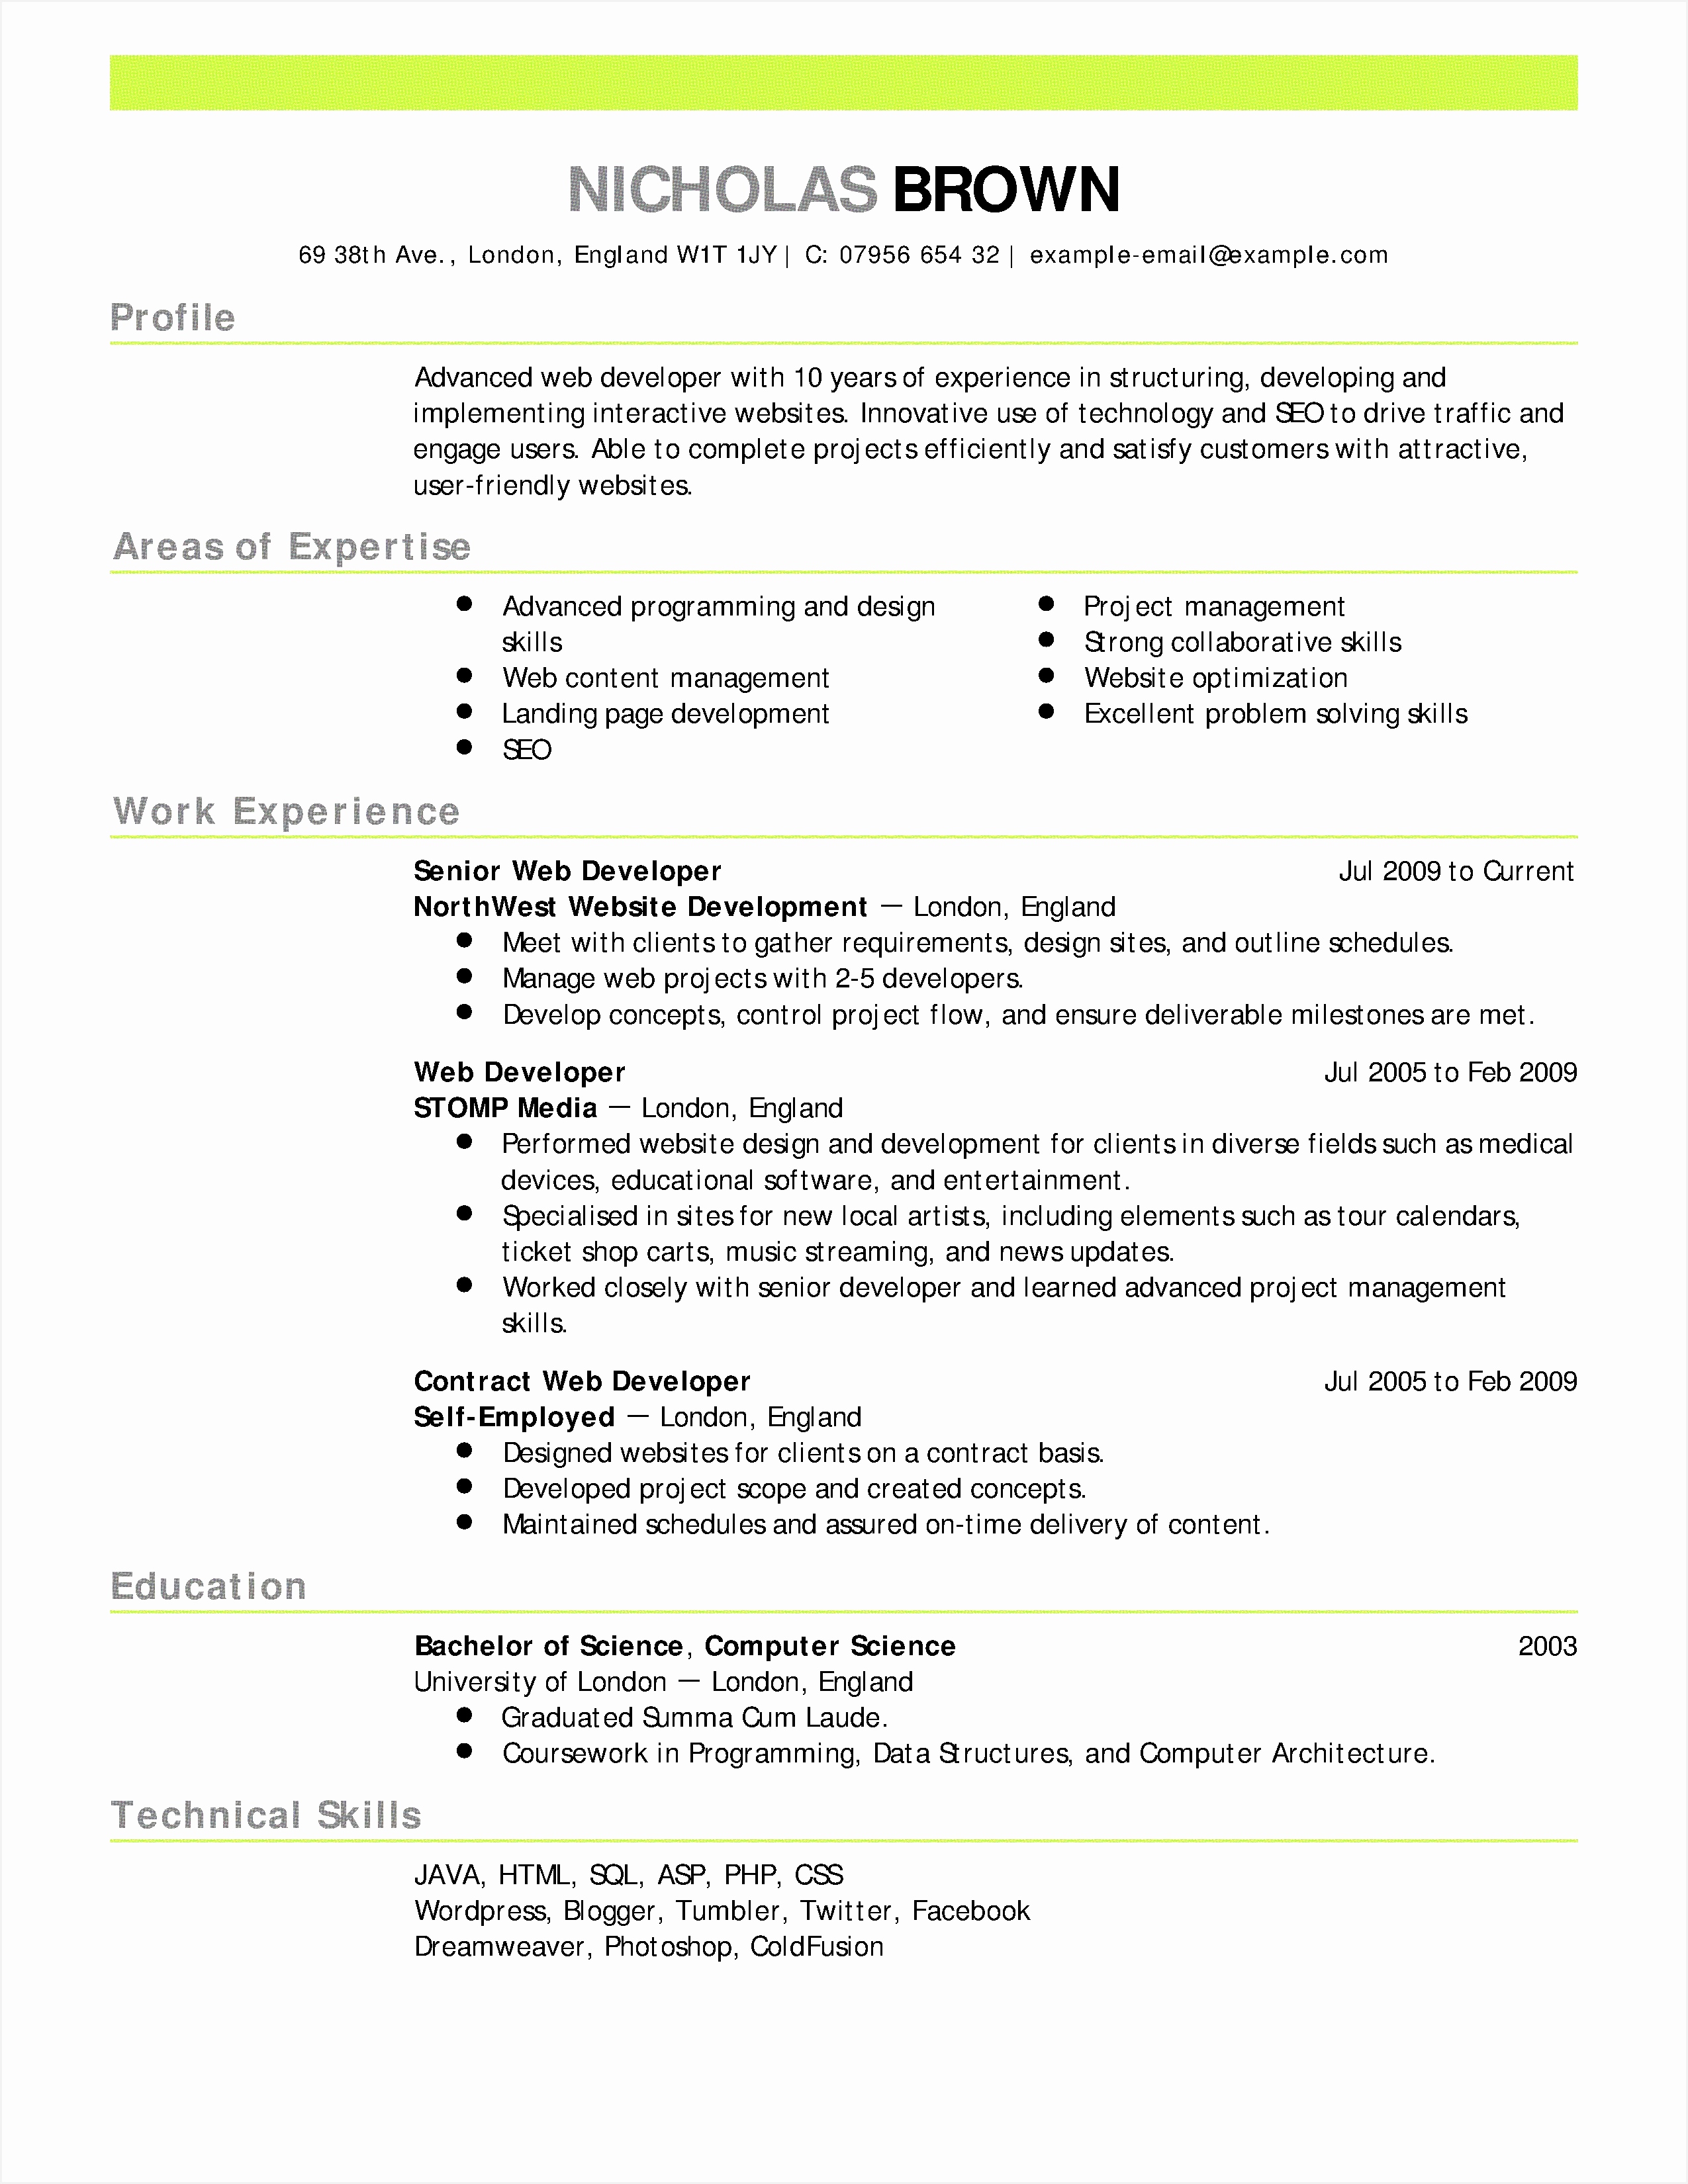 Linkedin Profile Template Word Fresh Best Resume Template Word Pdf format33002550